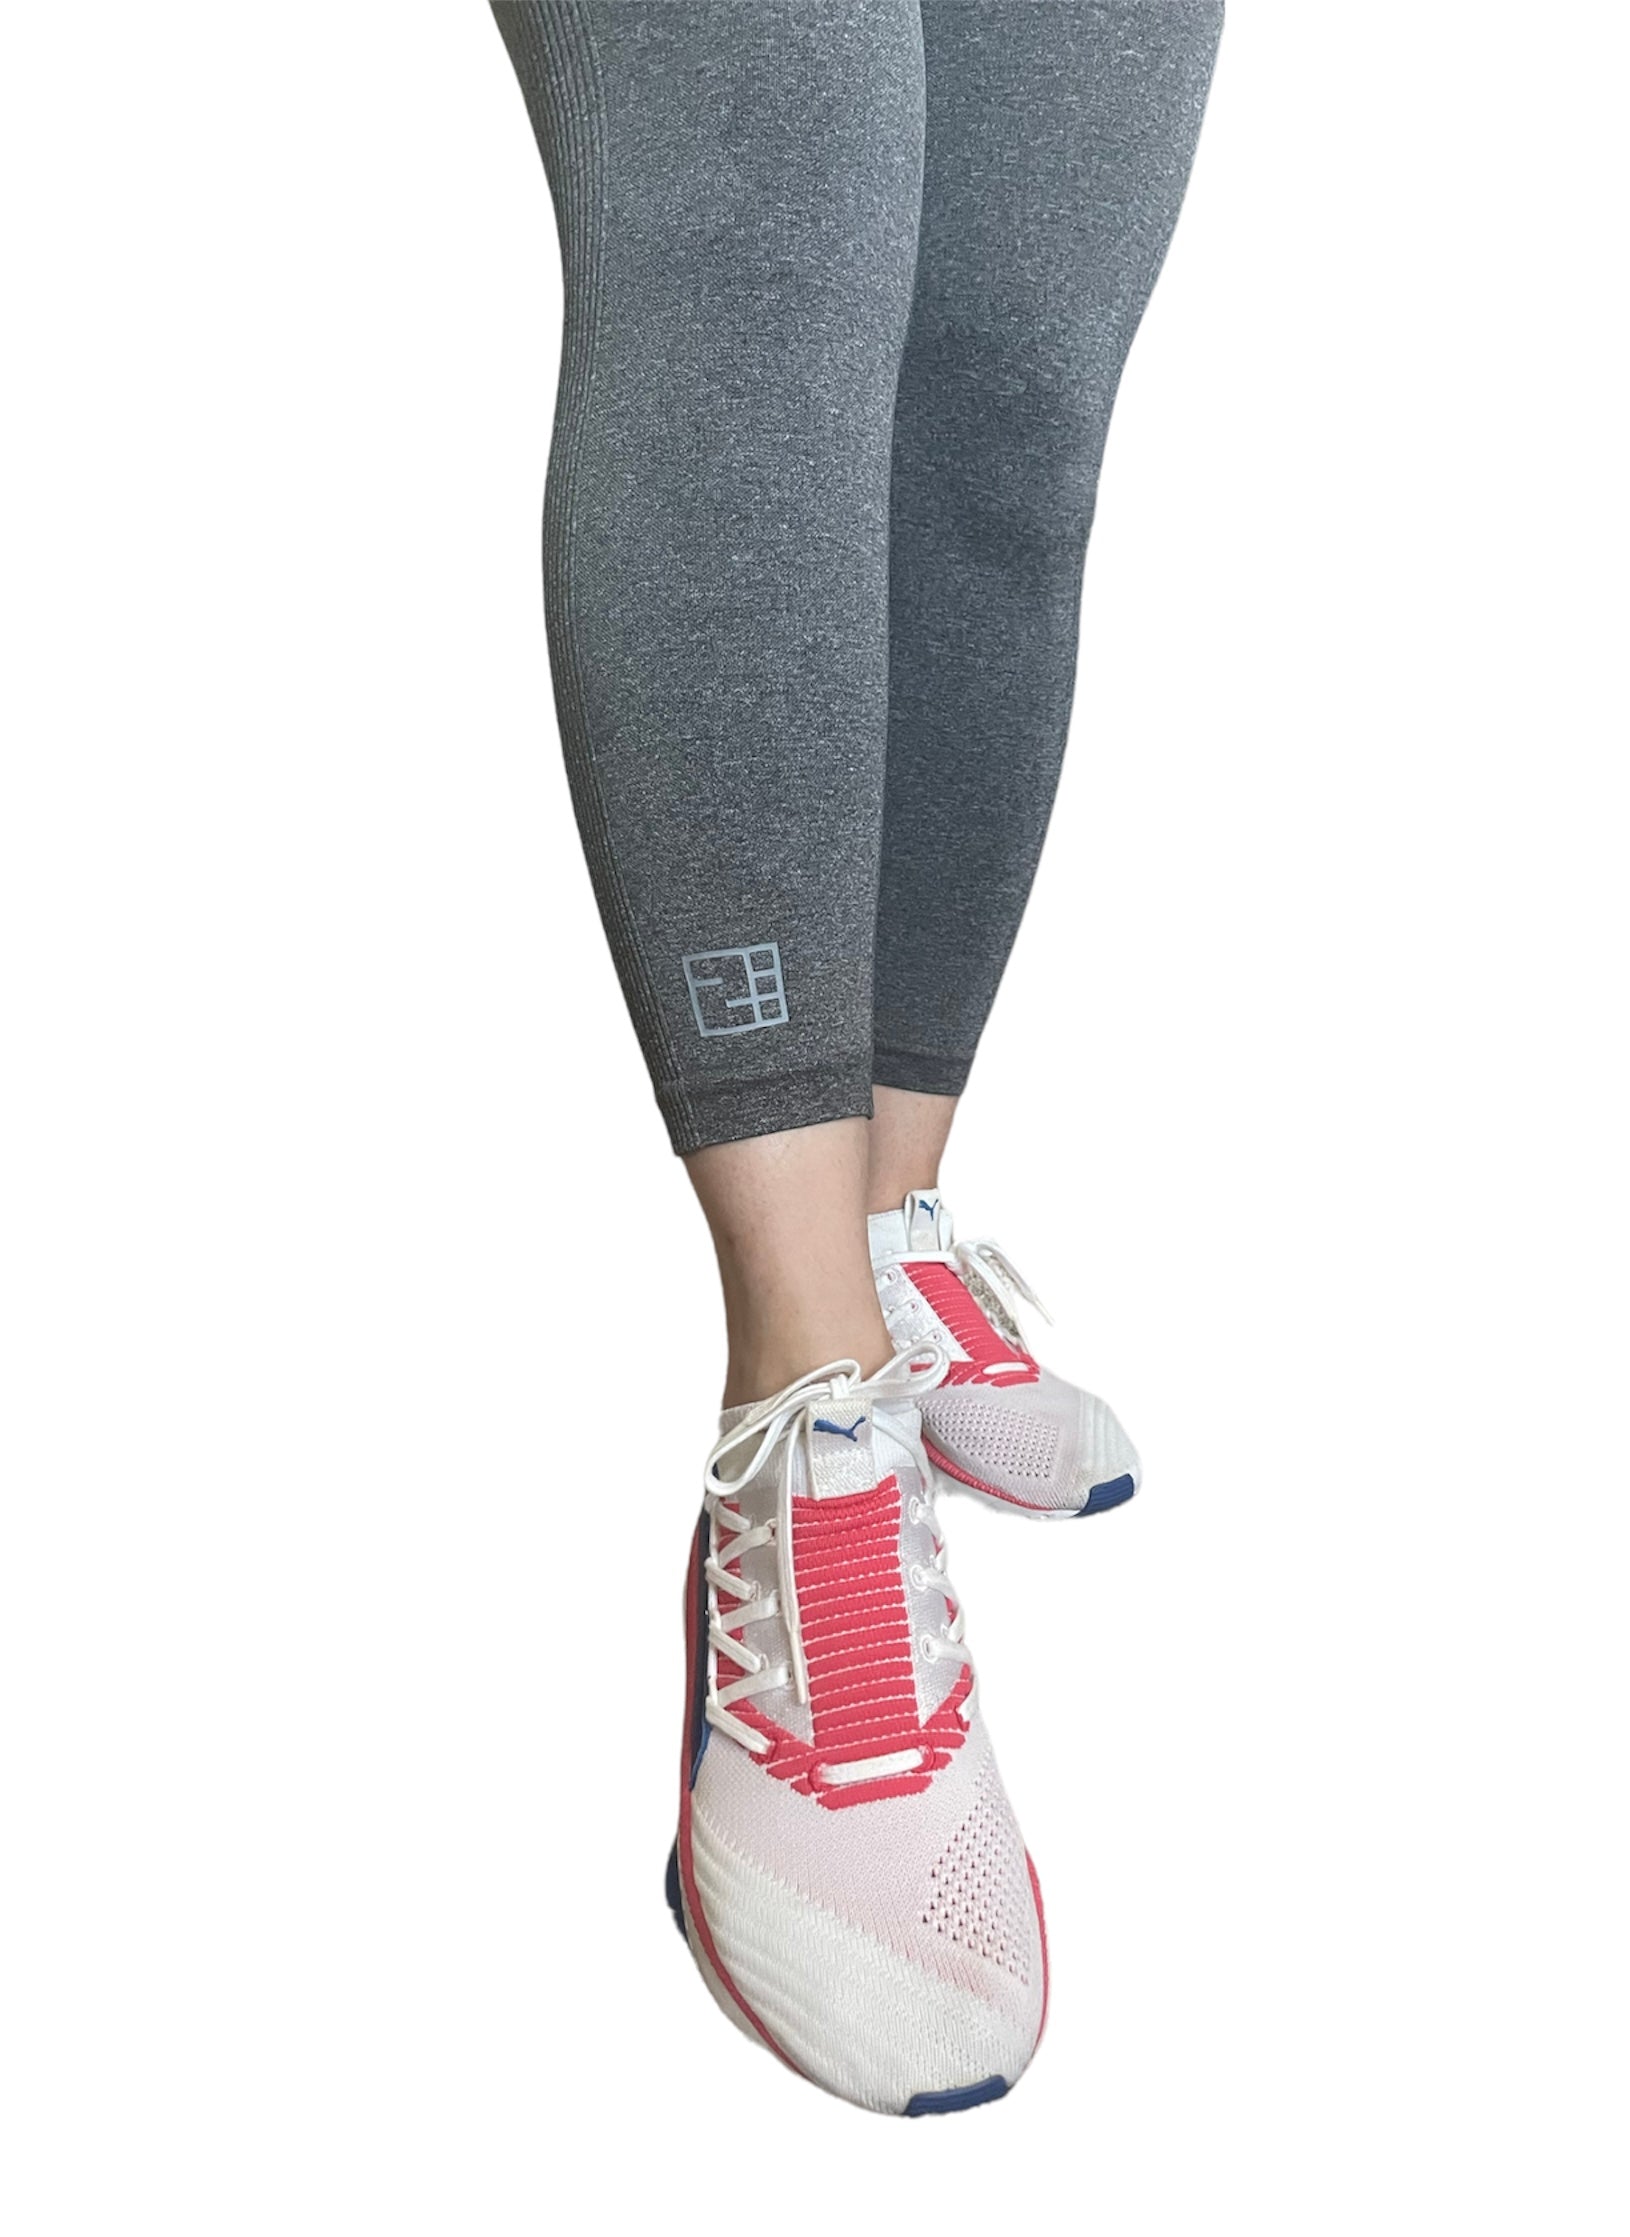 Bare Pro Legging : 23 - Carbon / XS  Squat proof leggings, Legging, S  models